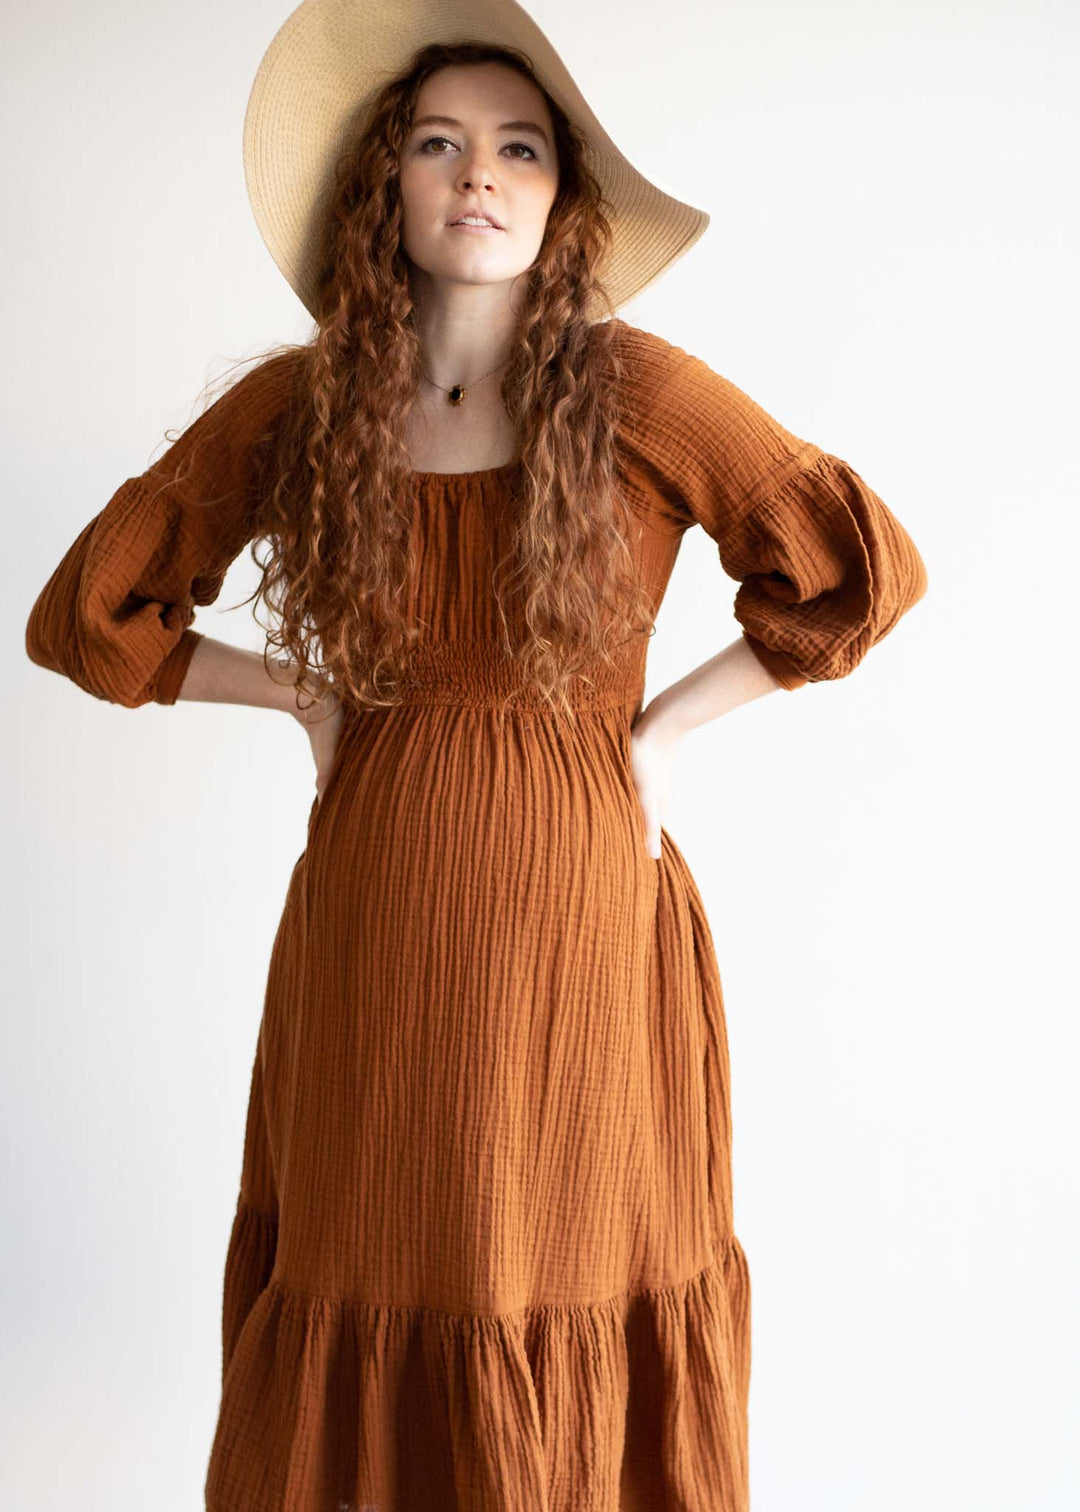 The Eliza Dress in Cinnamon, Smocked Elastic Dress